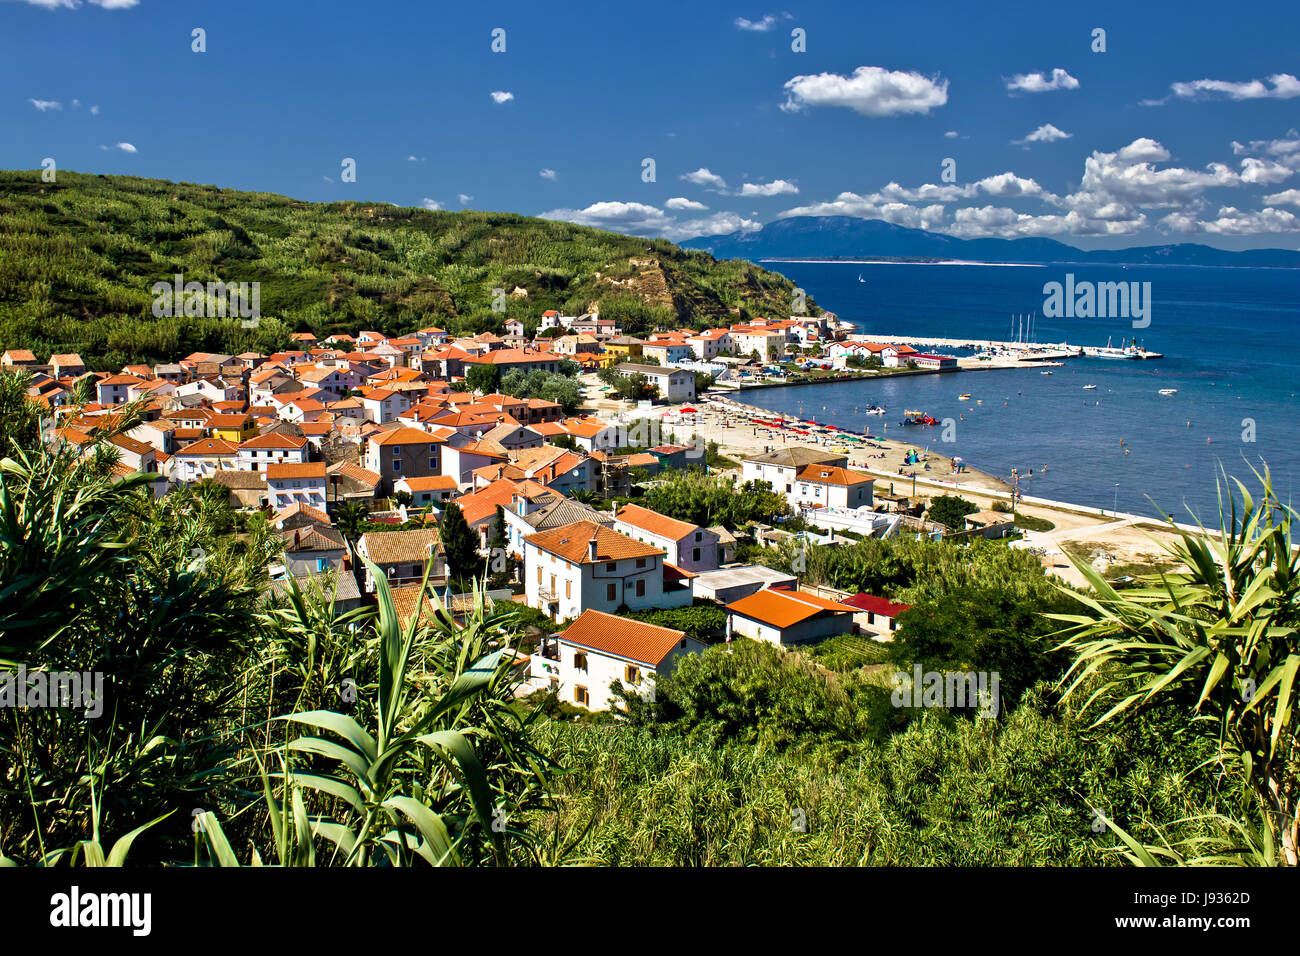 blue, city, town, croatia, island, community, village, market town, lawn, Stock Photo